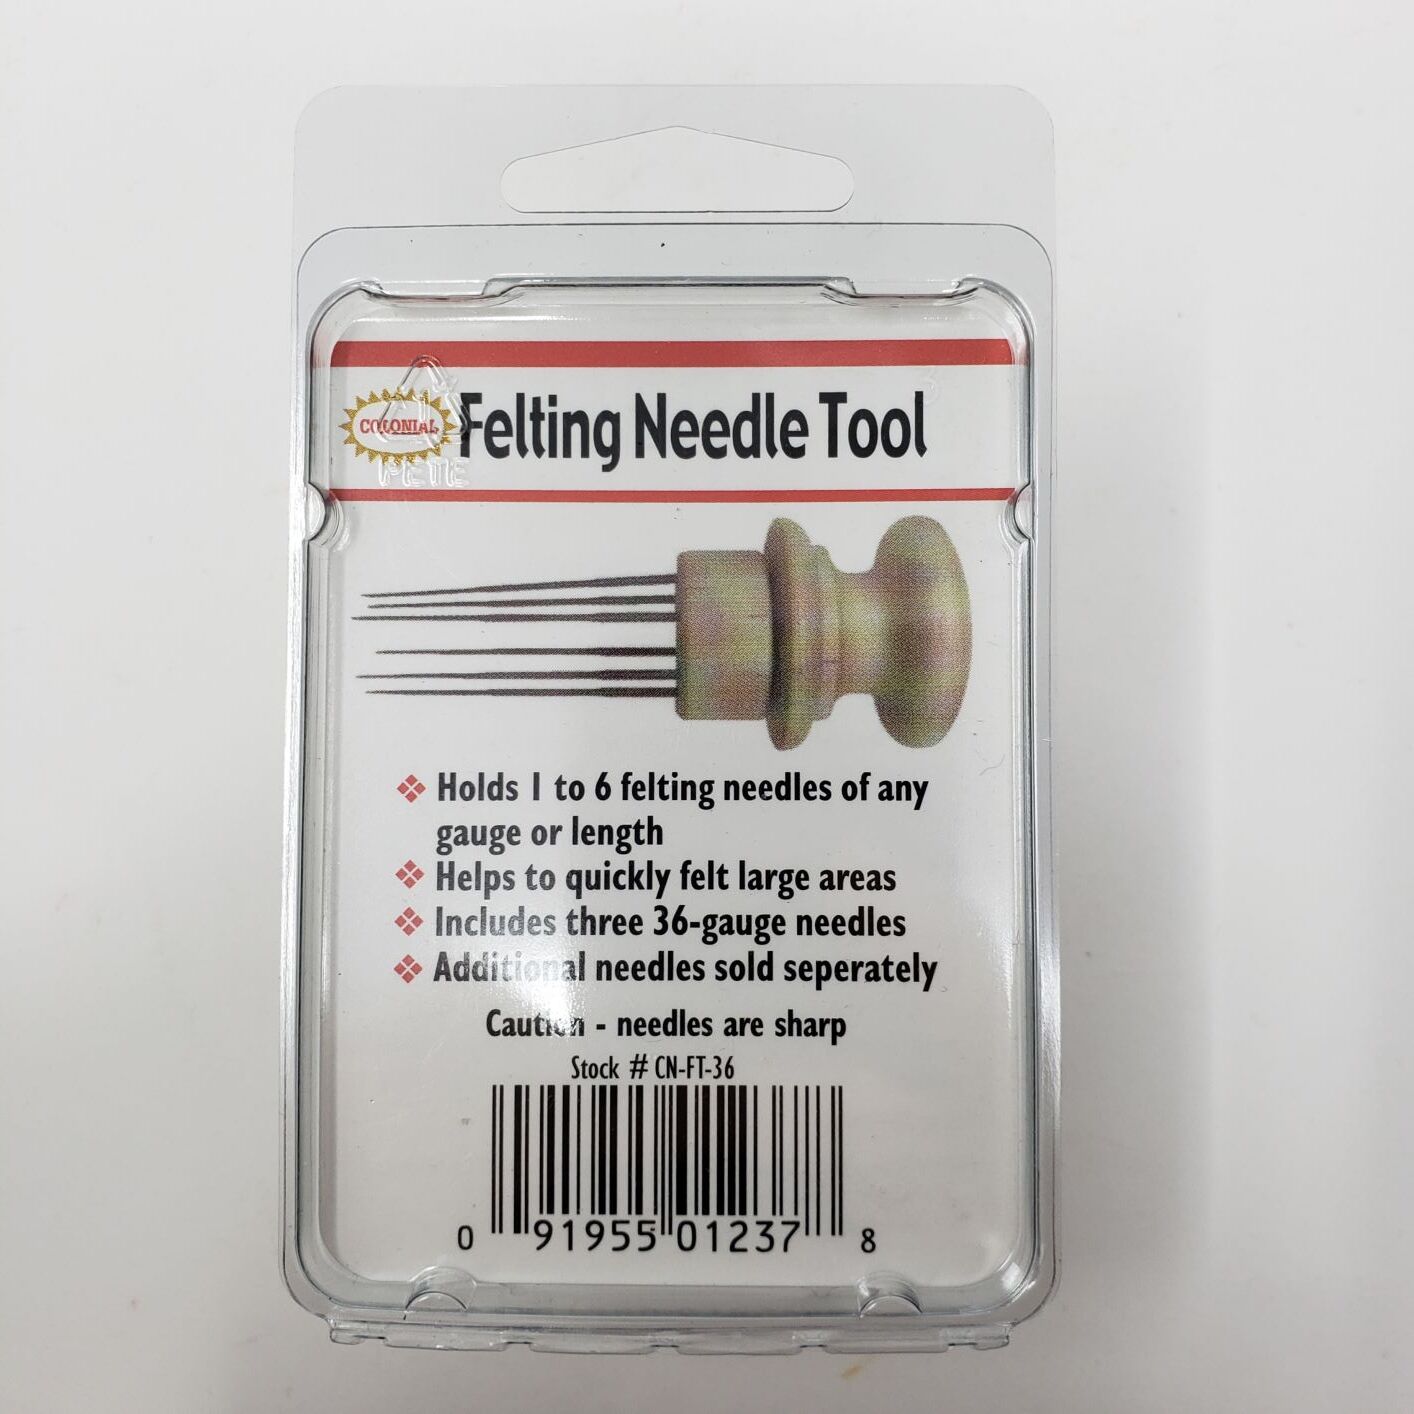 Colonial Needle Felting Needle Tool